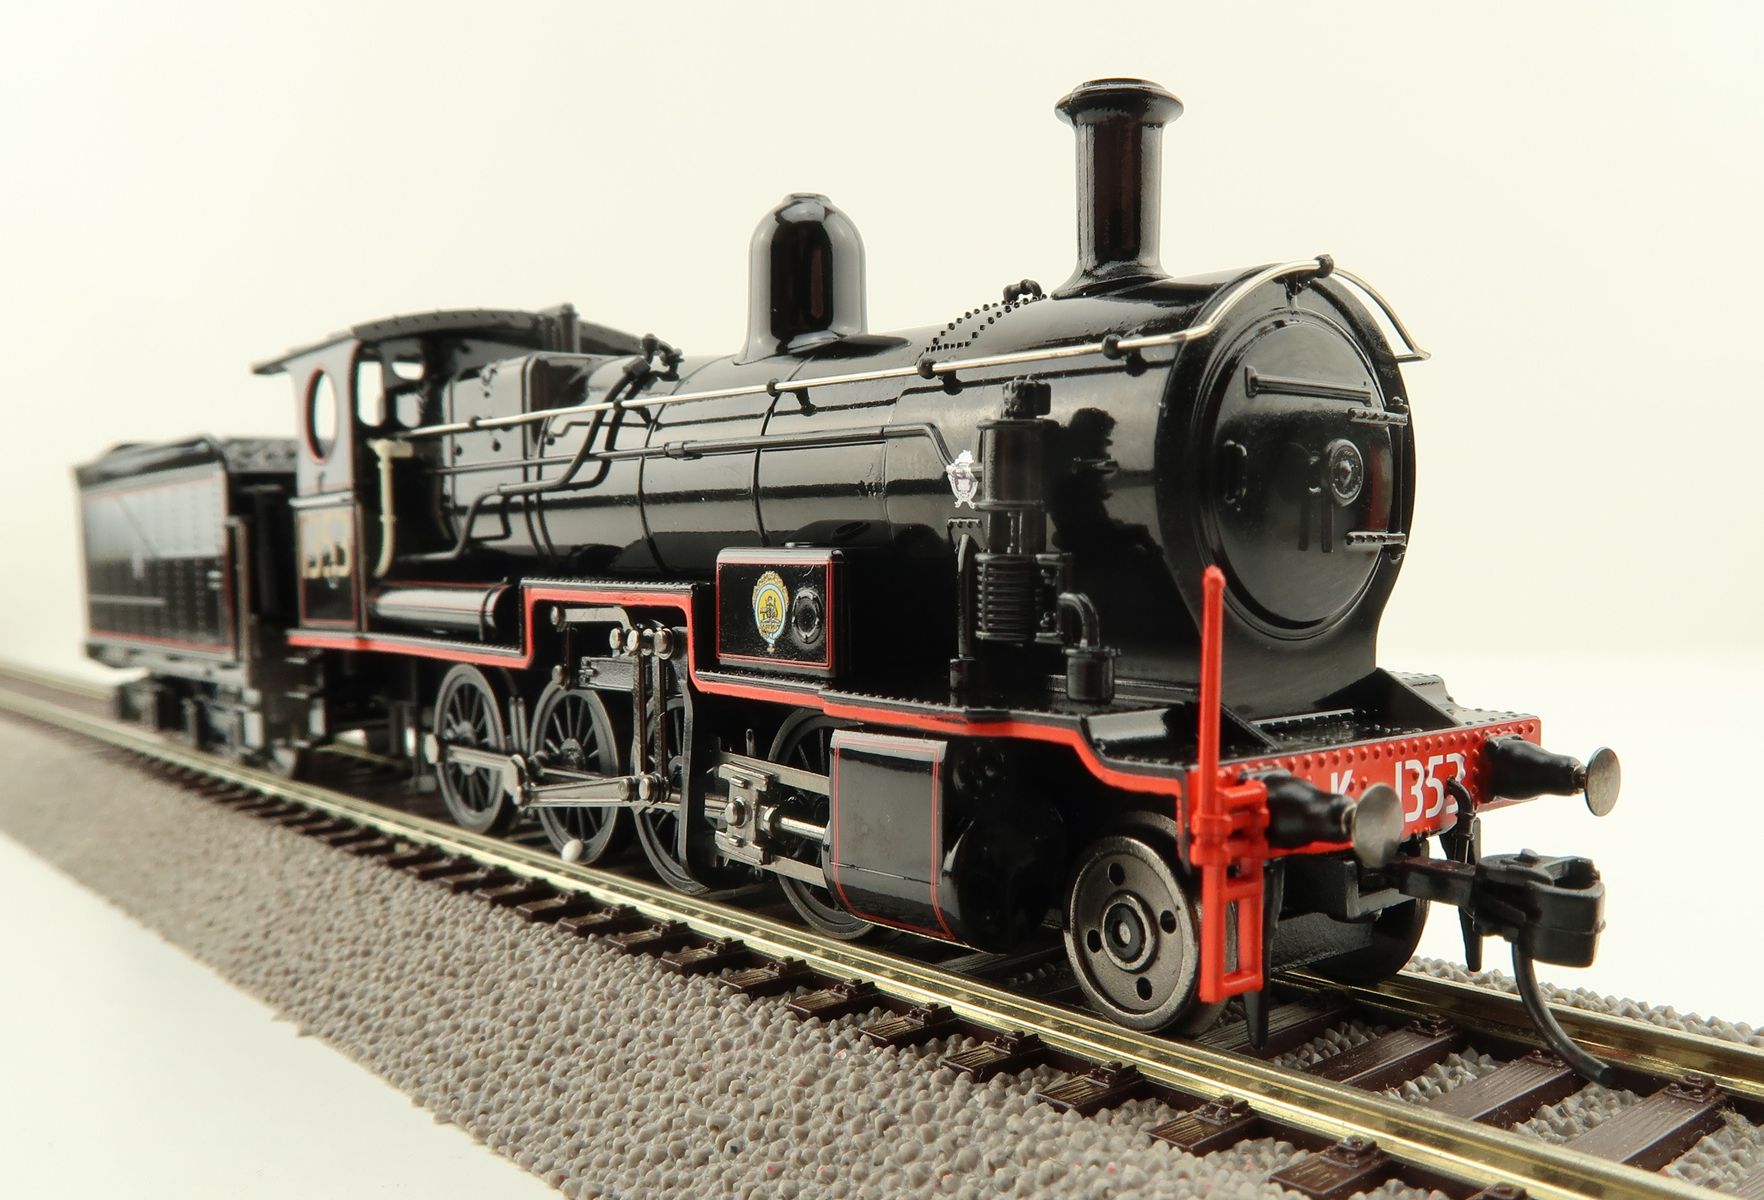 Product Image - Australian Railway Models 87050 NSWGR D55 K Class 2-8-0 Consolidation Steam Locomotive - 1:87